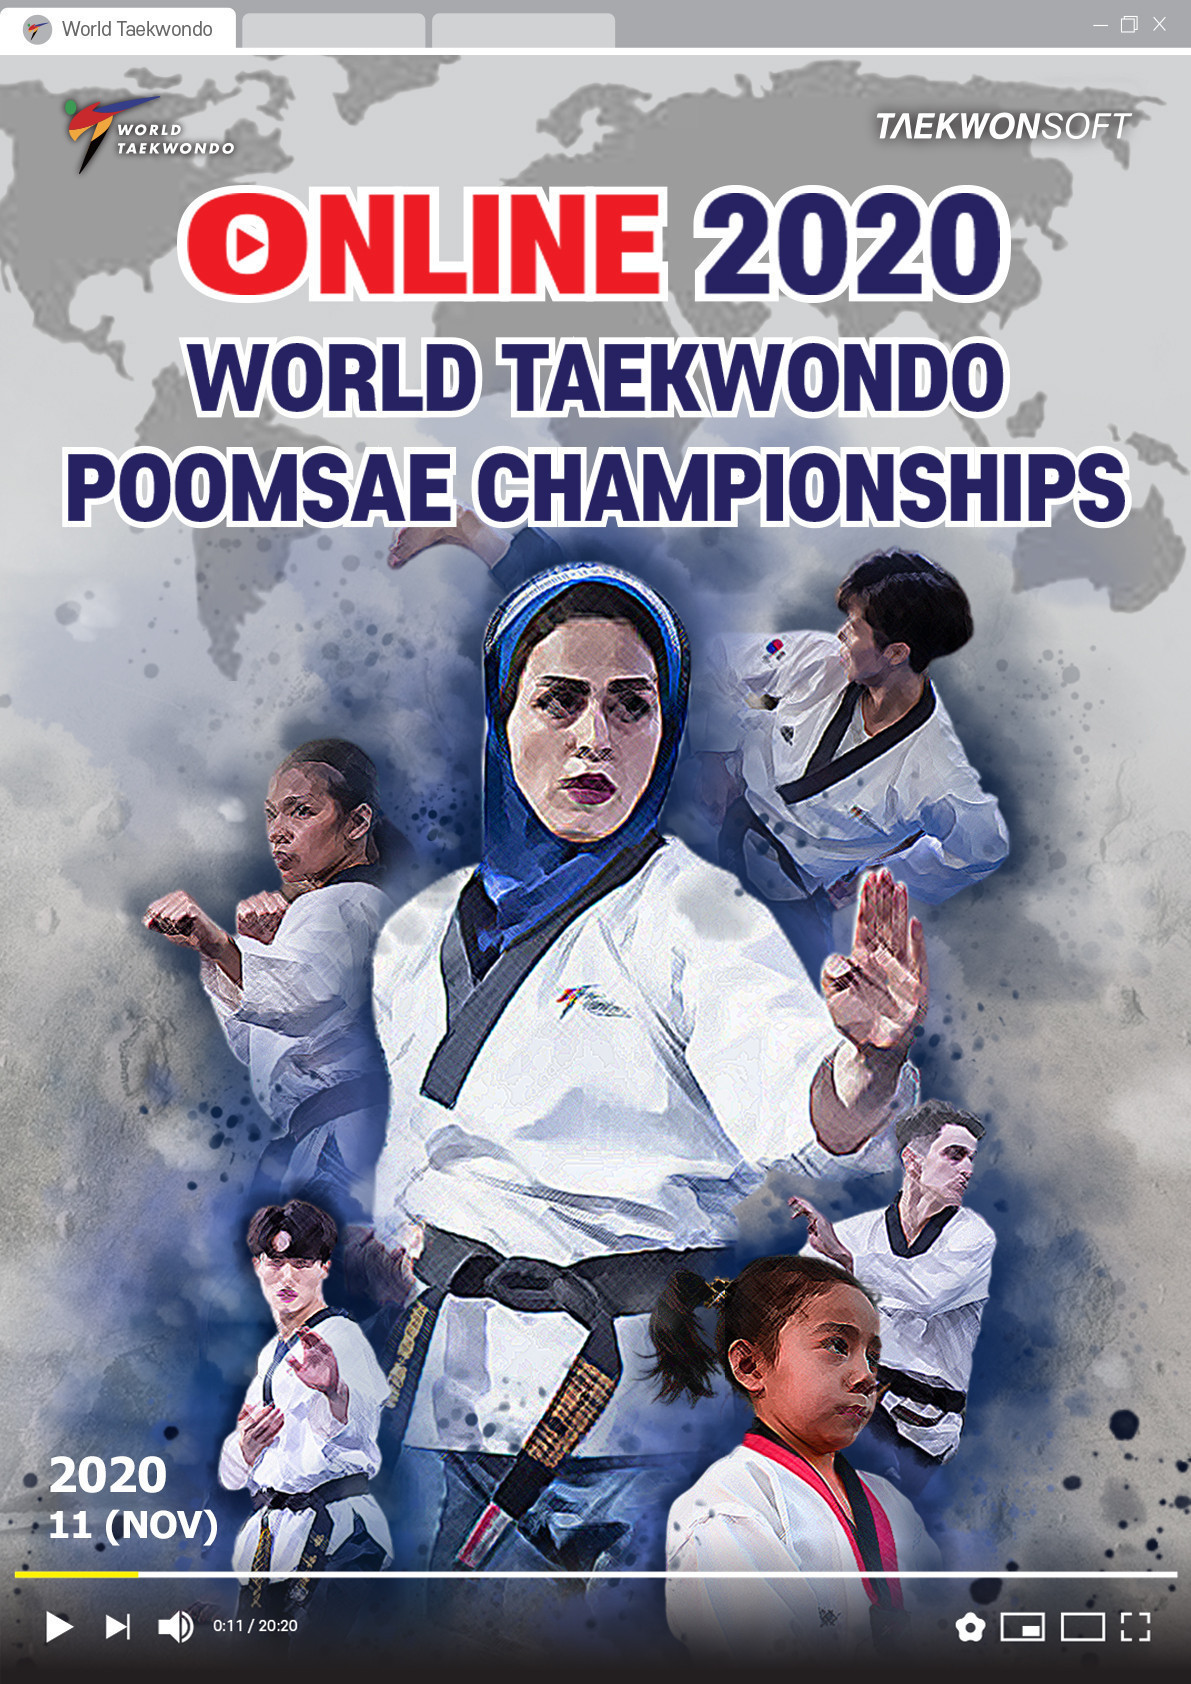 Submission window for Online World Taekwondo Poomsae Championships opens